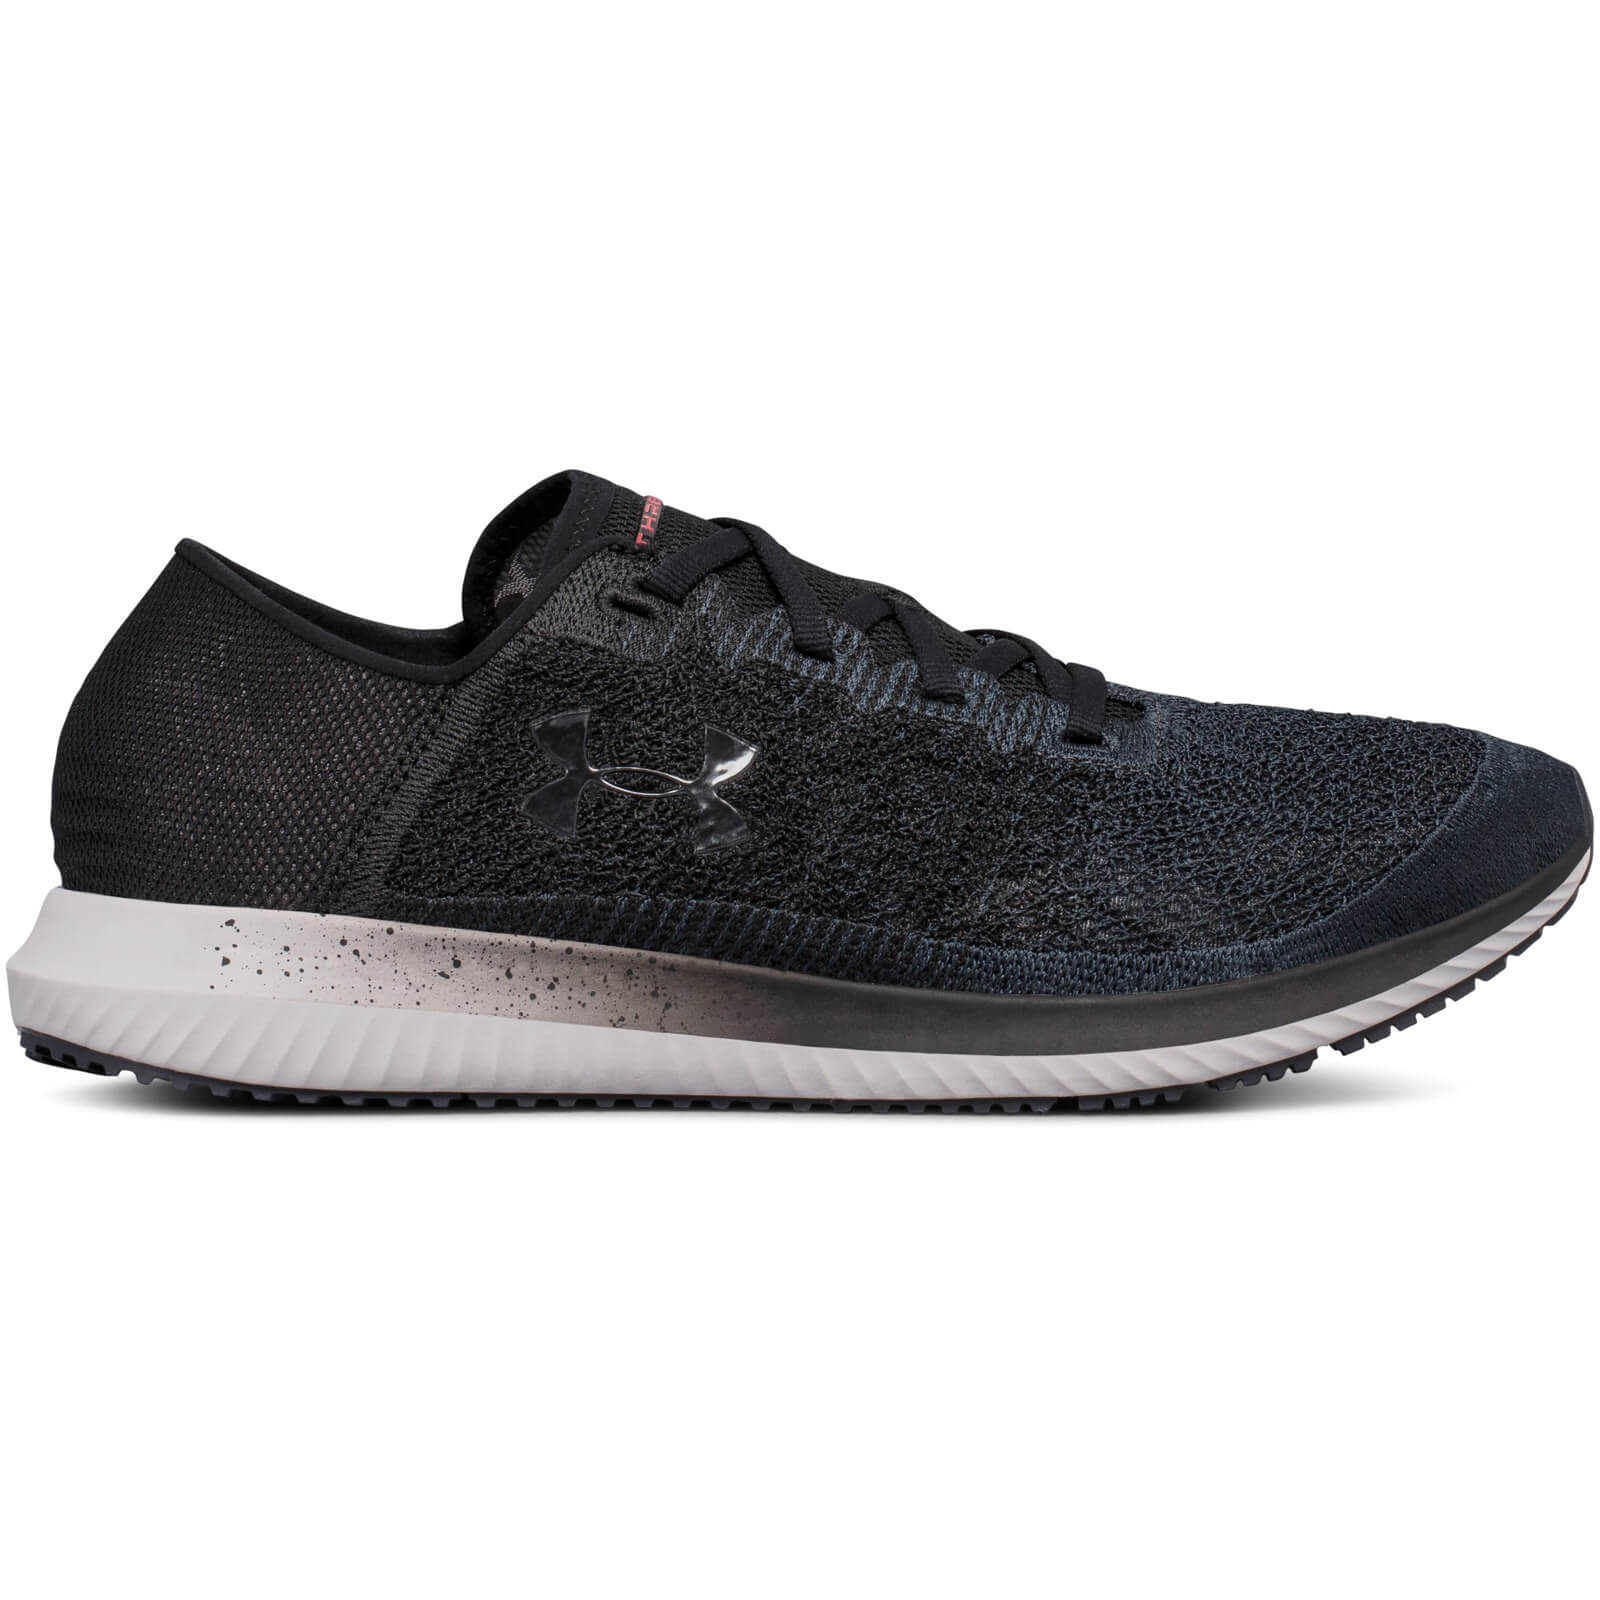 threadborne blur running shoes